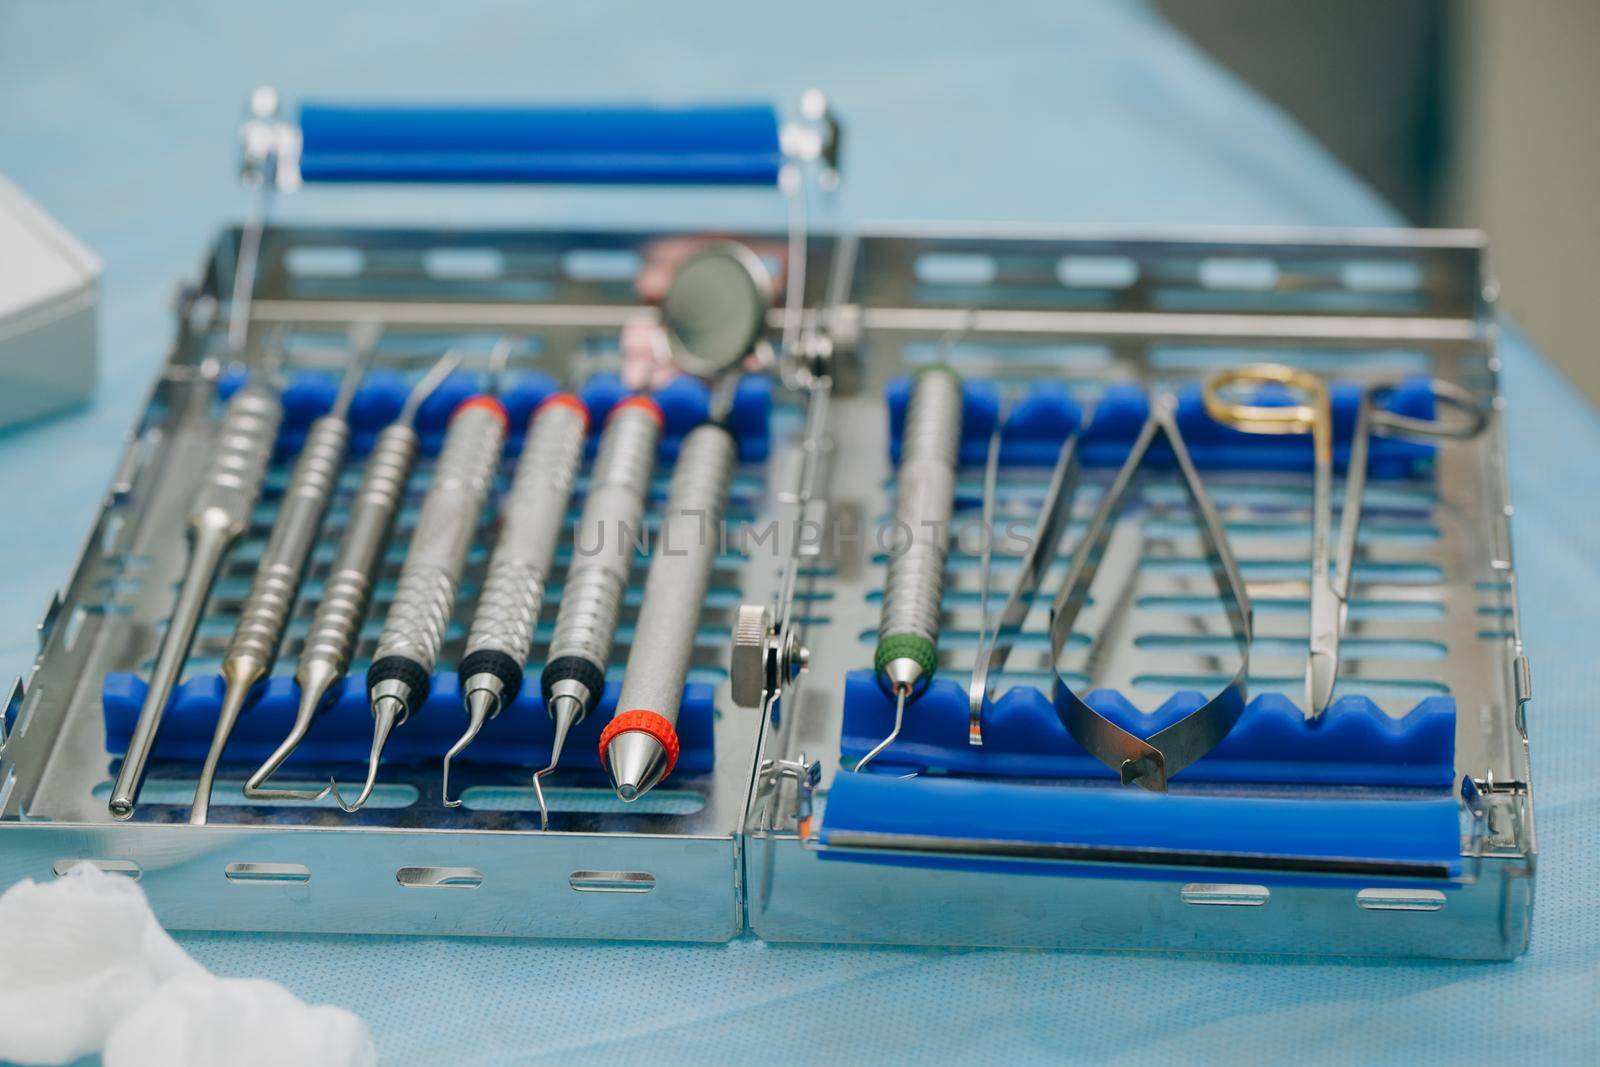 Dentist orthopedist tools. Dental implantation surgical set. Surgical kit of instruments used in dental implantology. by uflypro